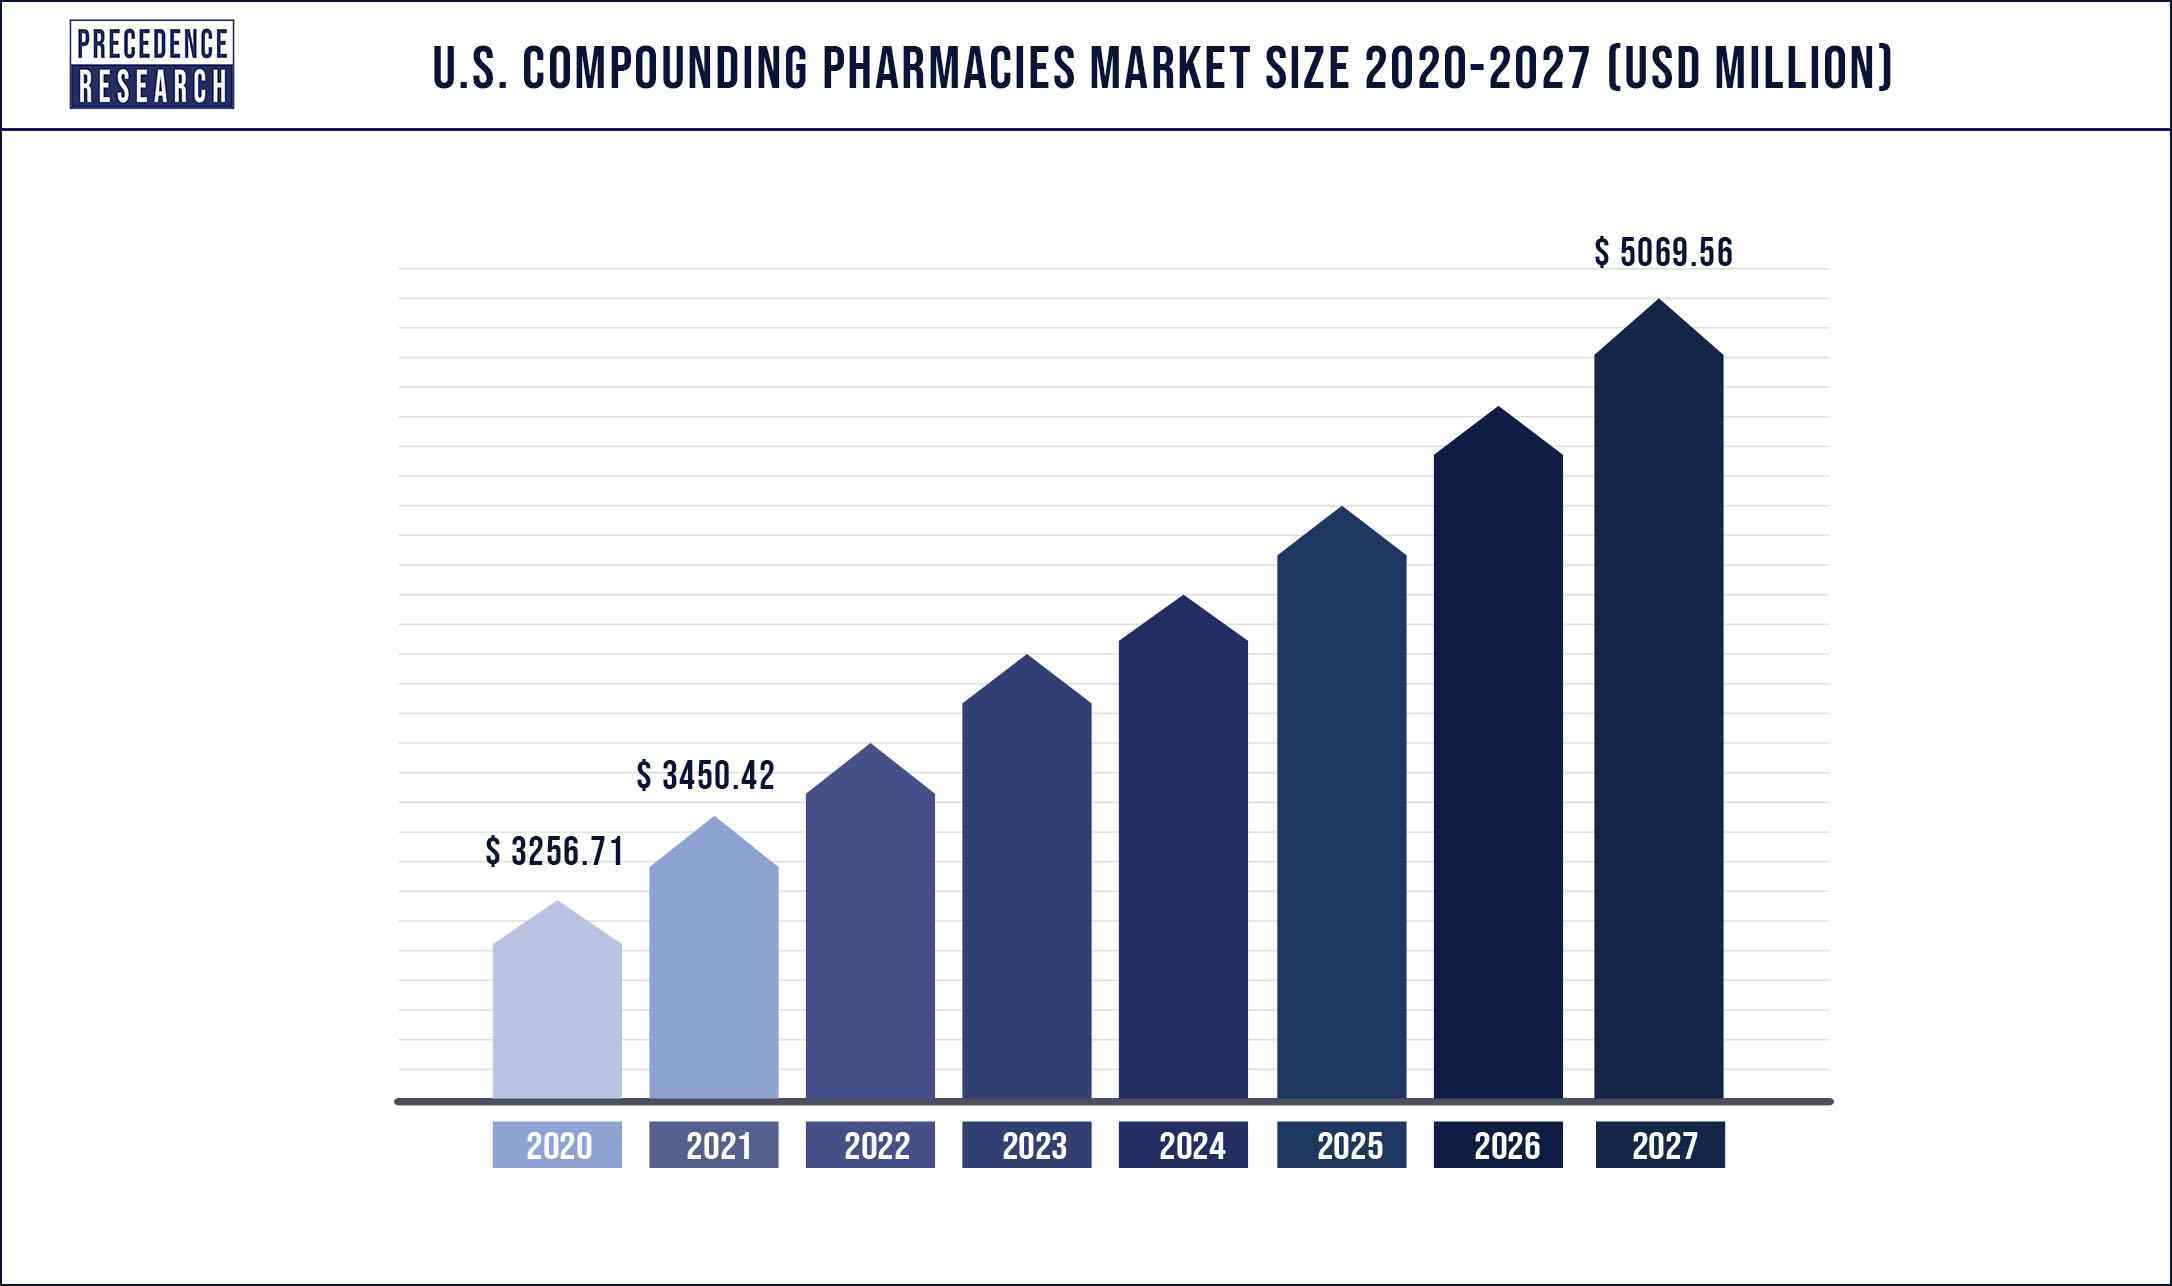 U.S. Compounding Pharmacies Market Size 2020 to 2027